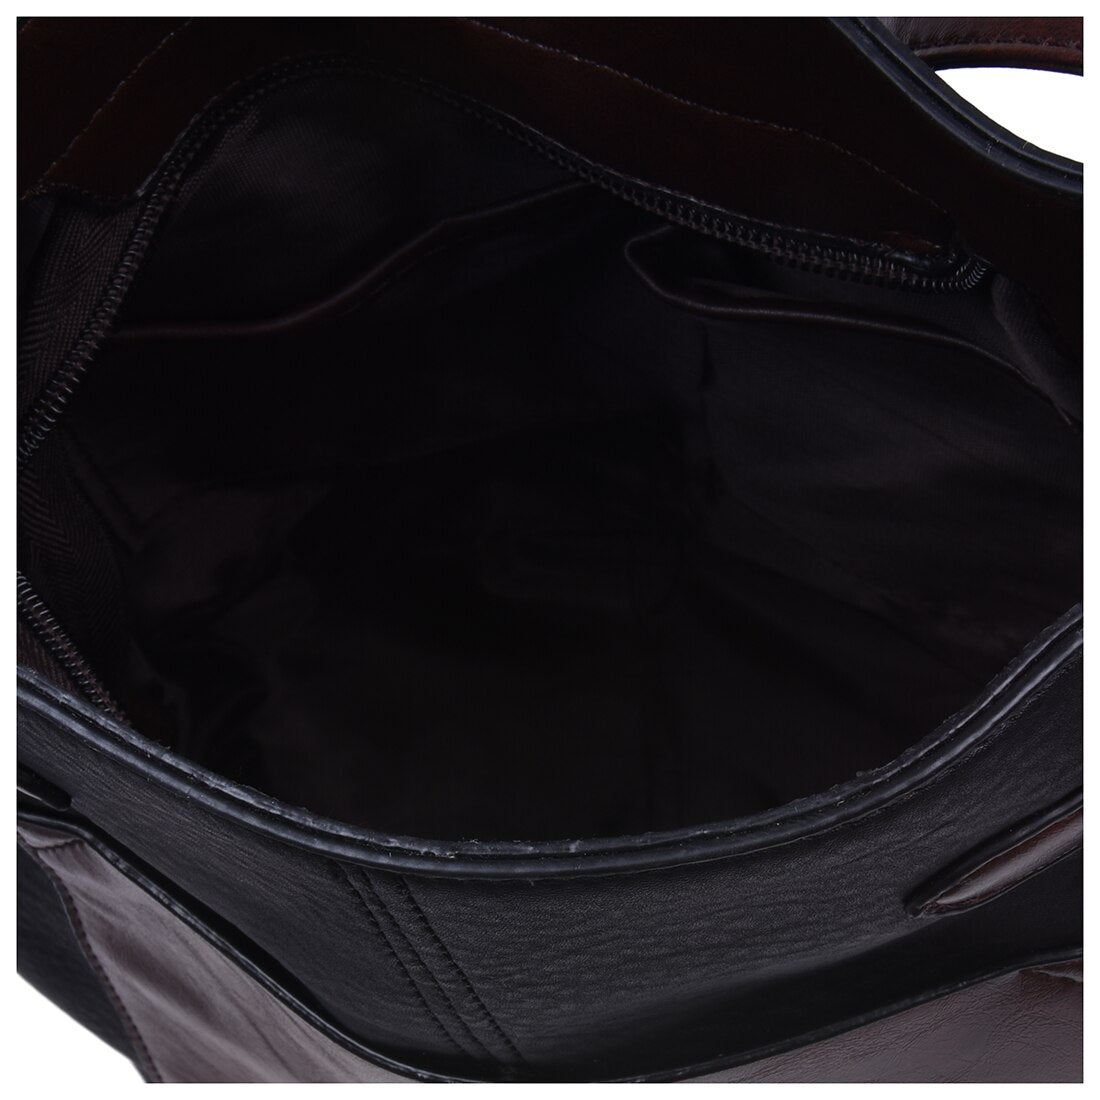 Fashion Scrub Women Bucket Bag Vintage Tassel Messenger Bag Large Retro Shoulder Bag Simple Crossbody Bag - ebowsos